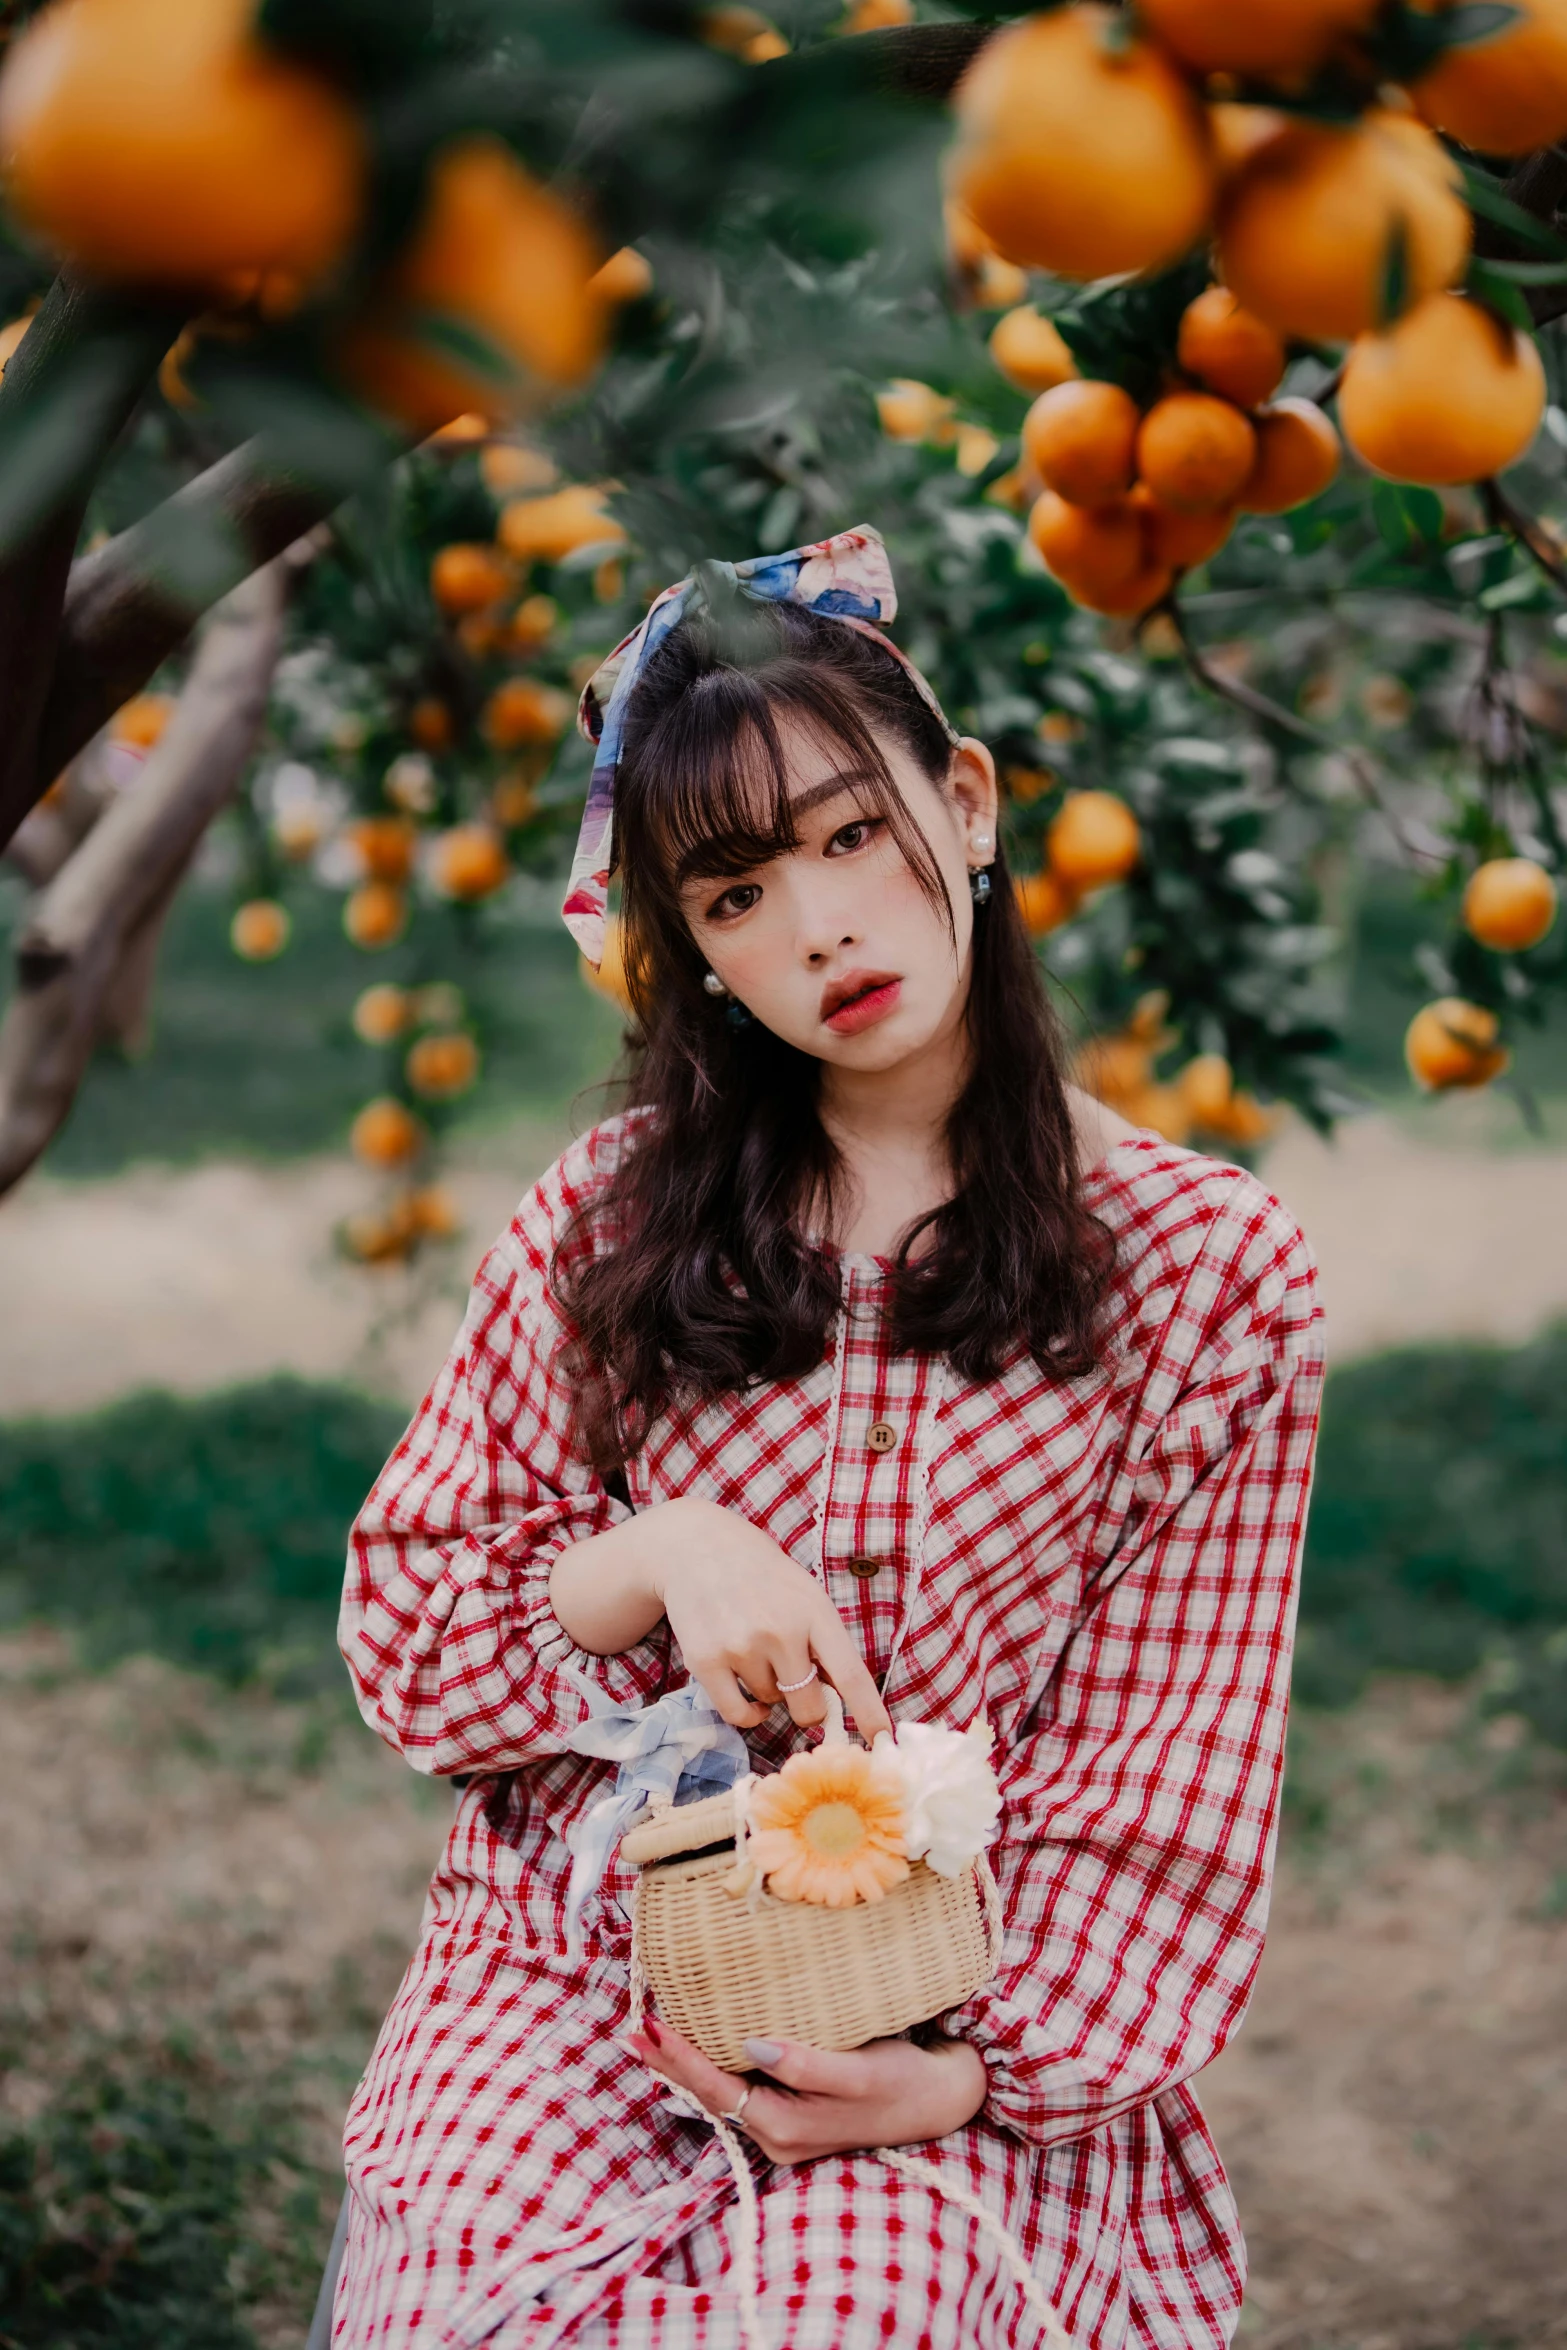 little girl with hat holding basket of food sitting under orange tree